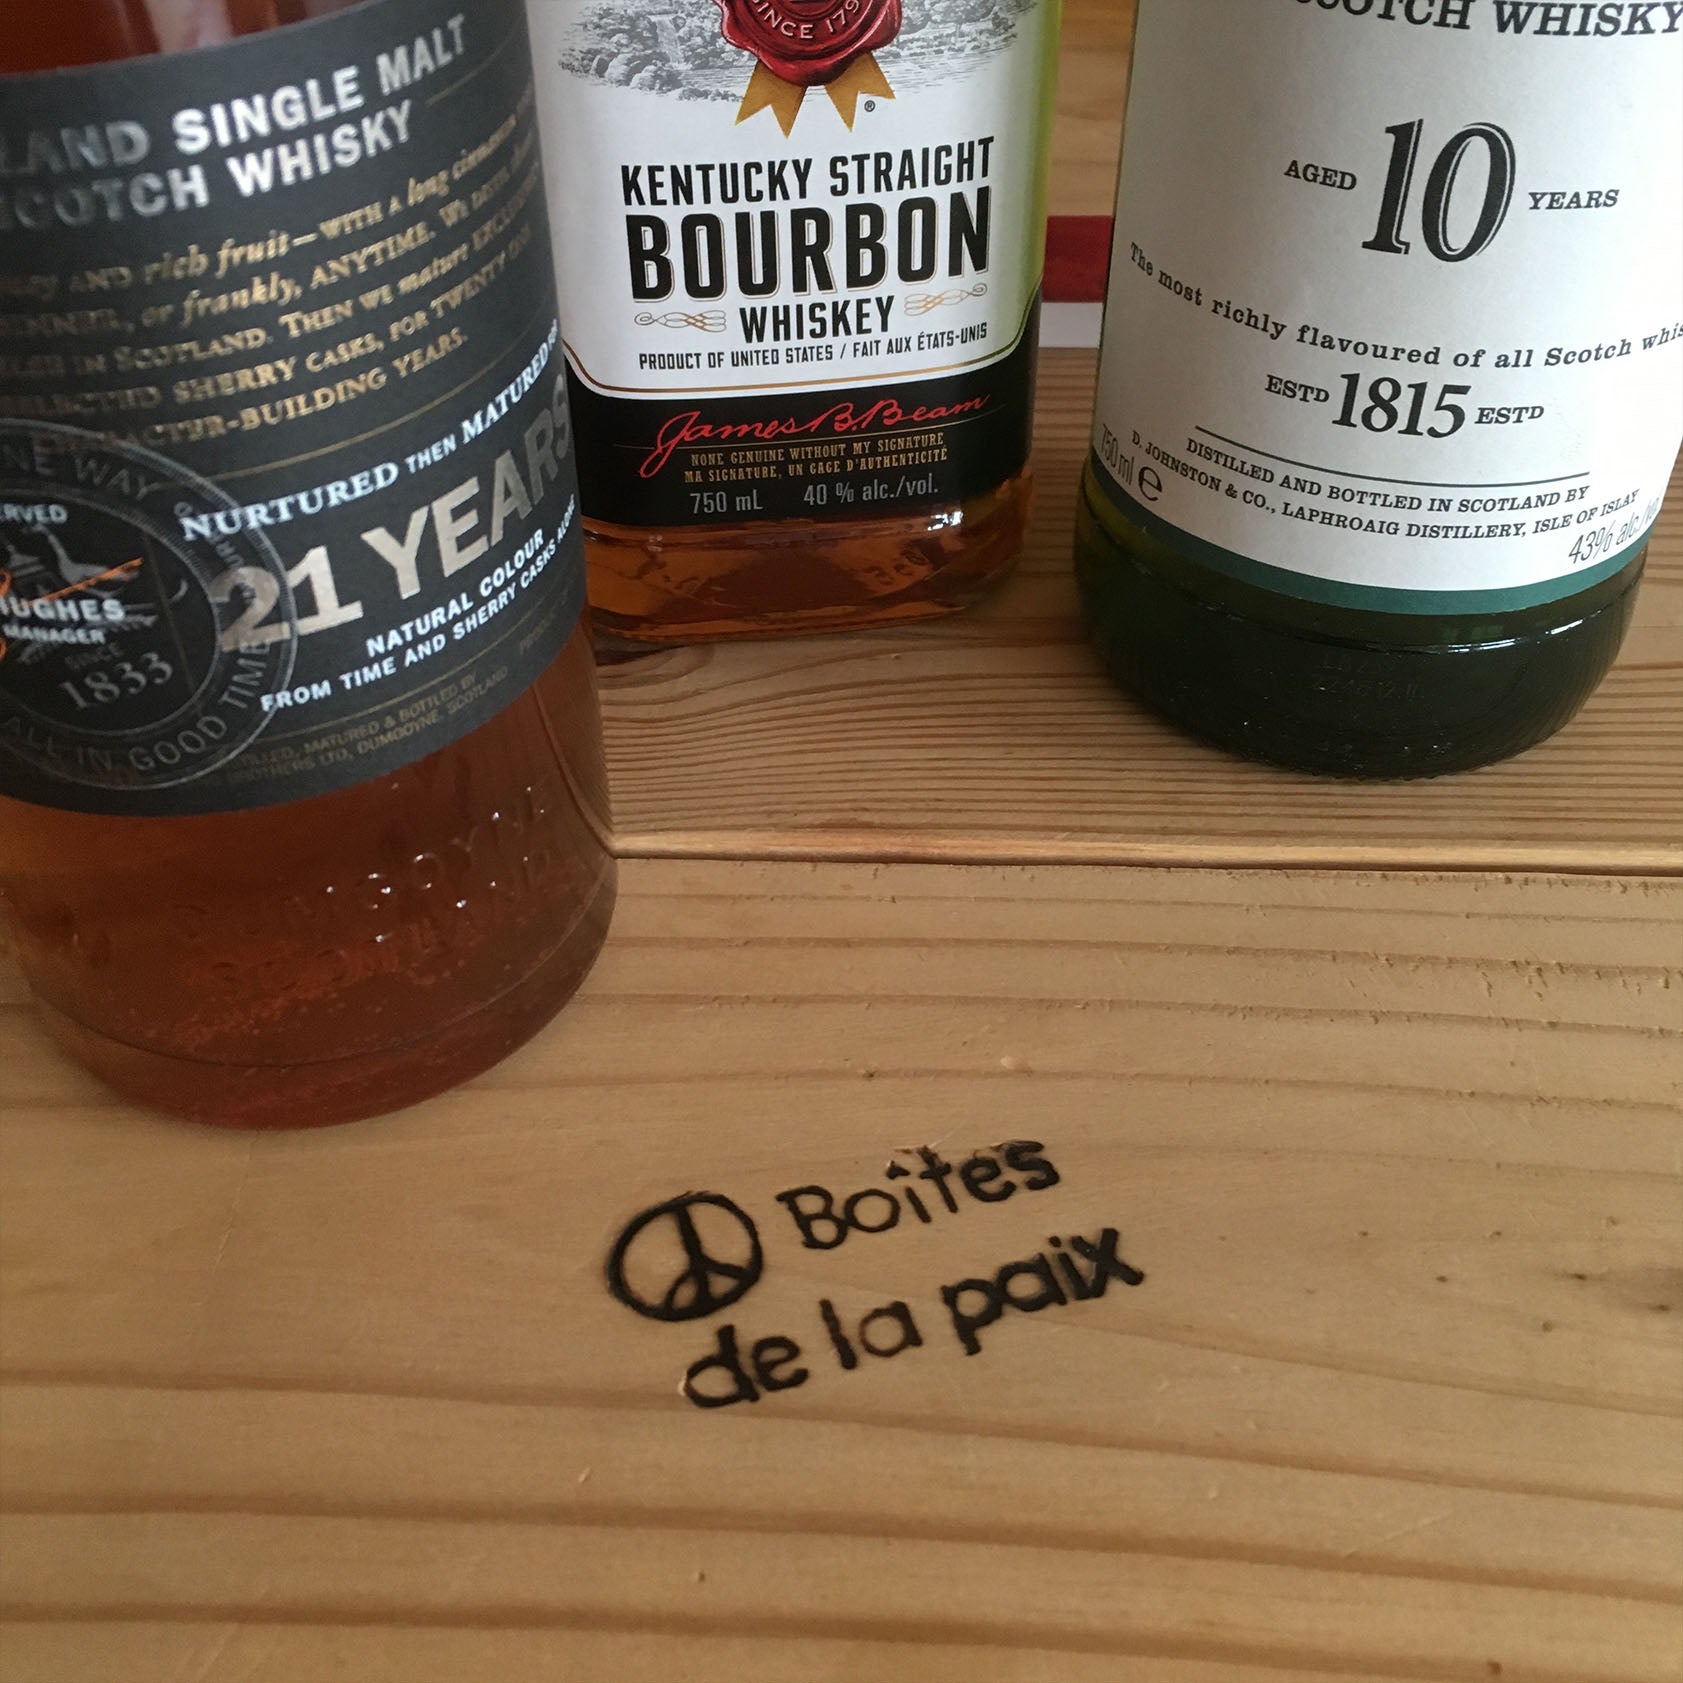 Single malt scotch whiskey | Bourbon whiskey | 10 year aged scotch whisky